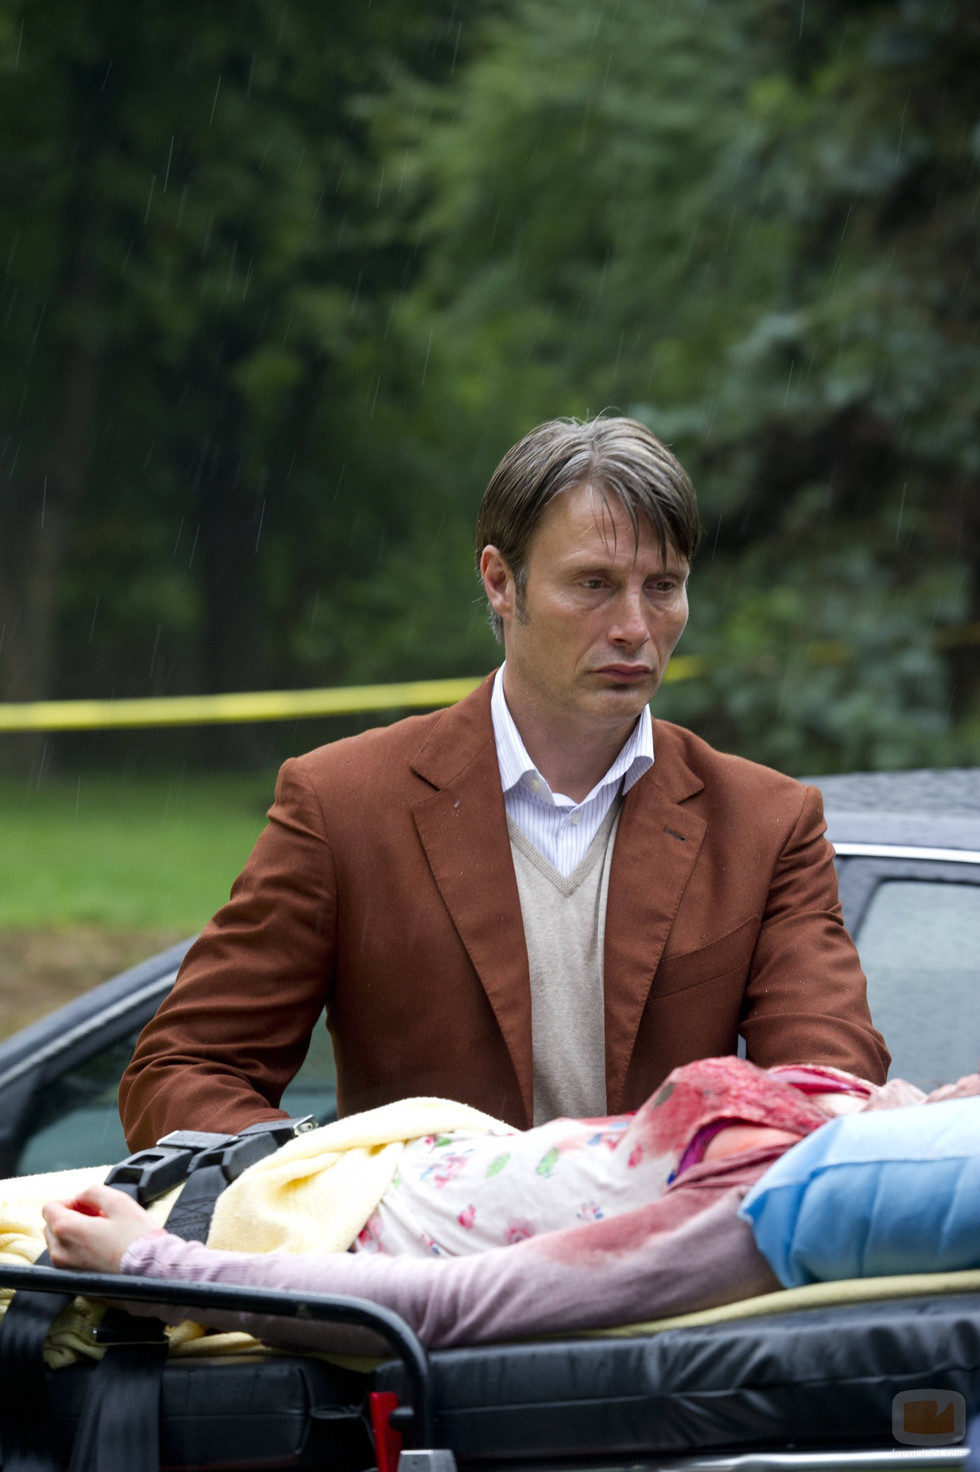 Mads Mikkelsen es el nuevo Hannibal Lecter de NBC